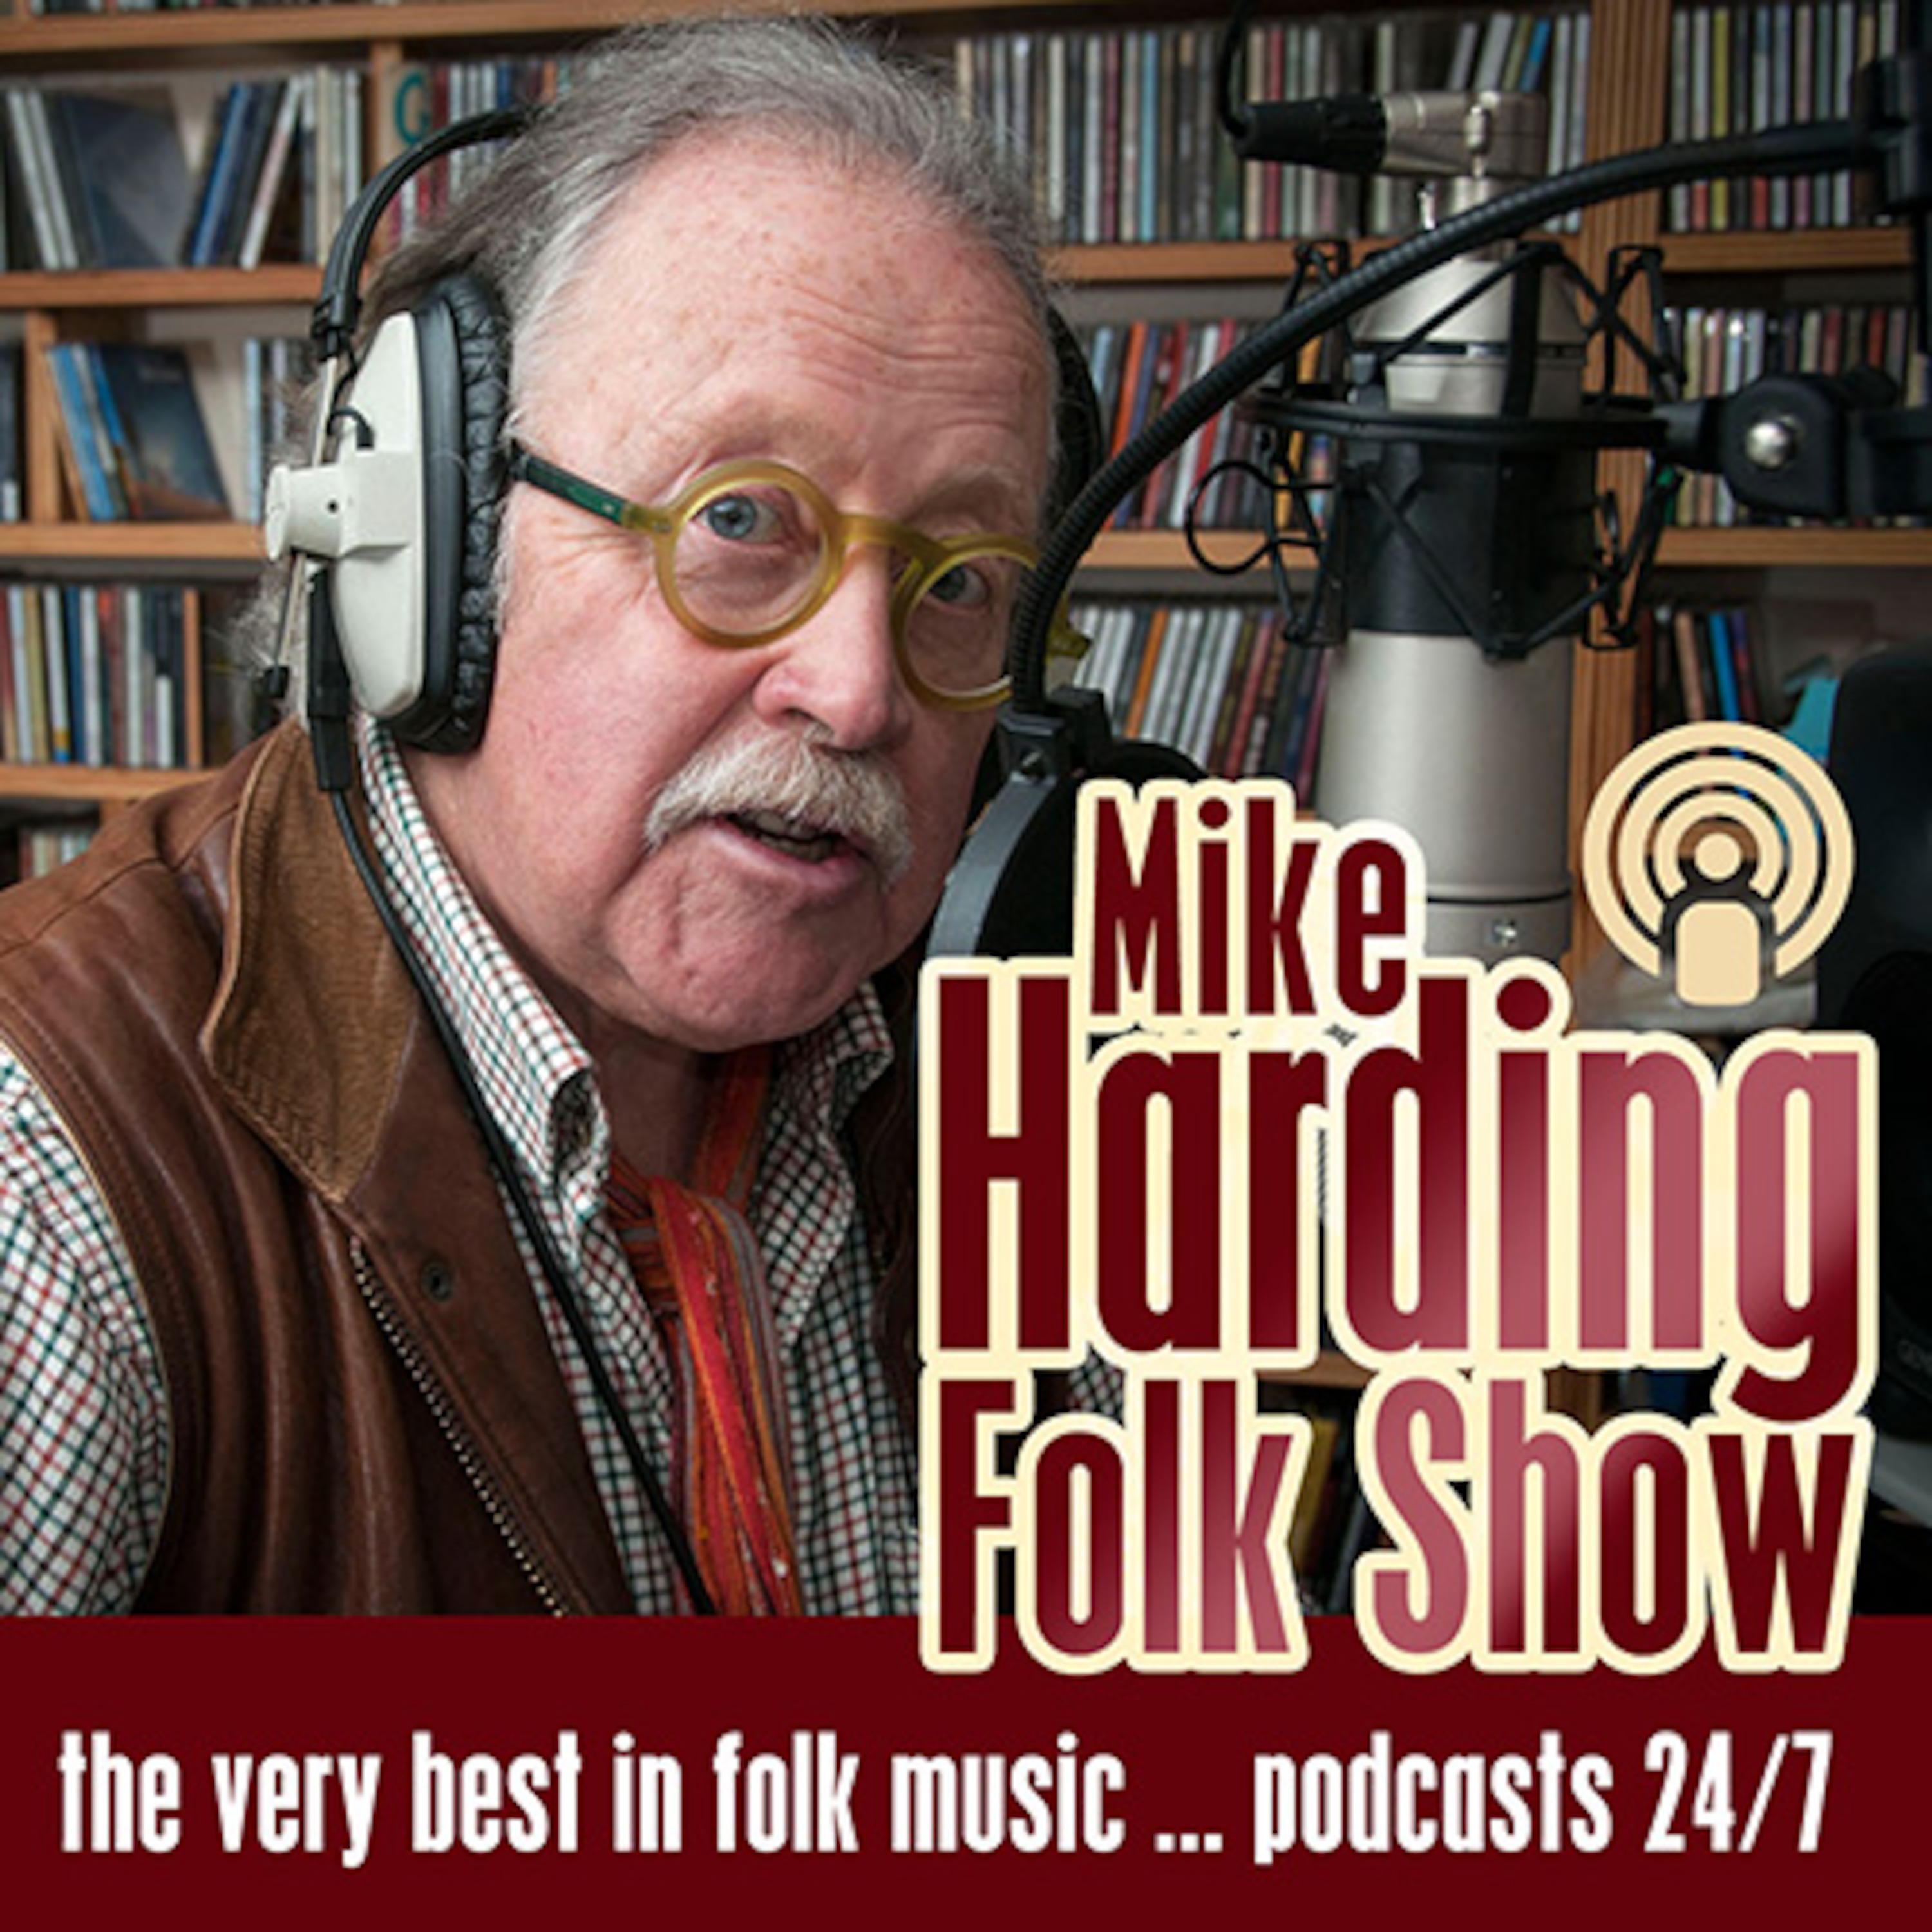 Mike Harding Folk Show 179